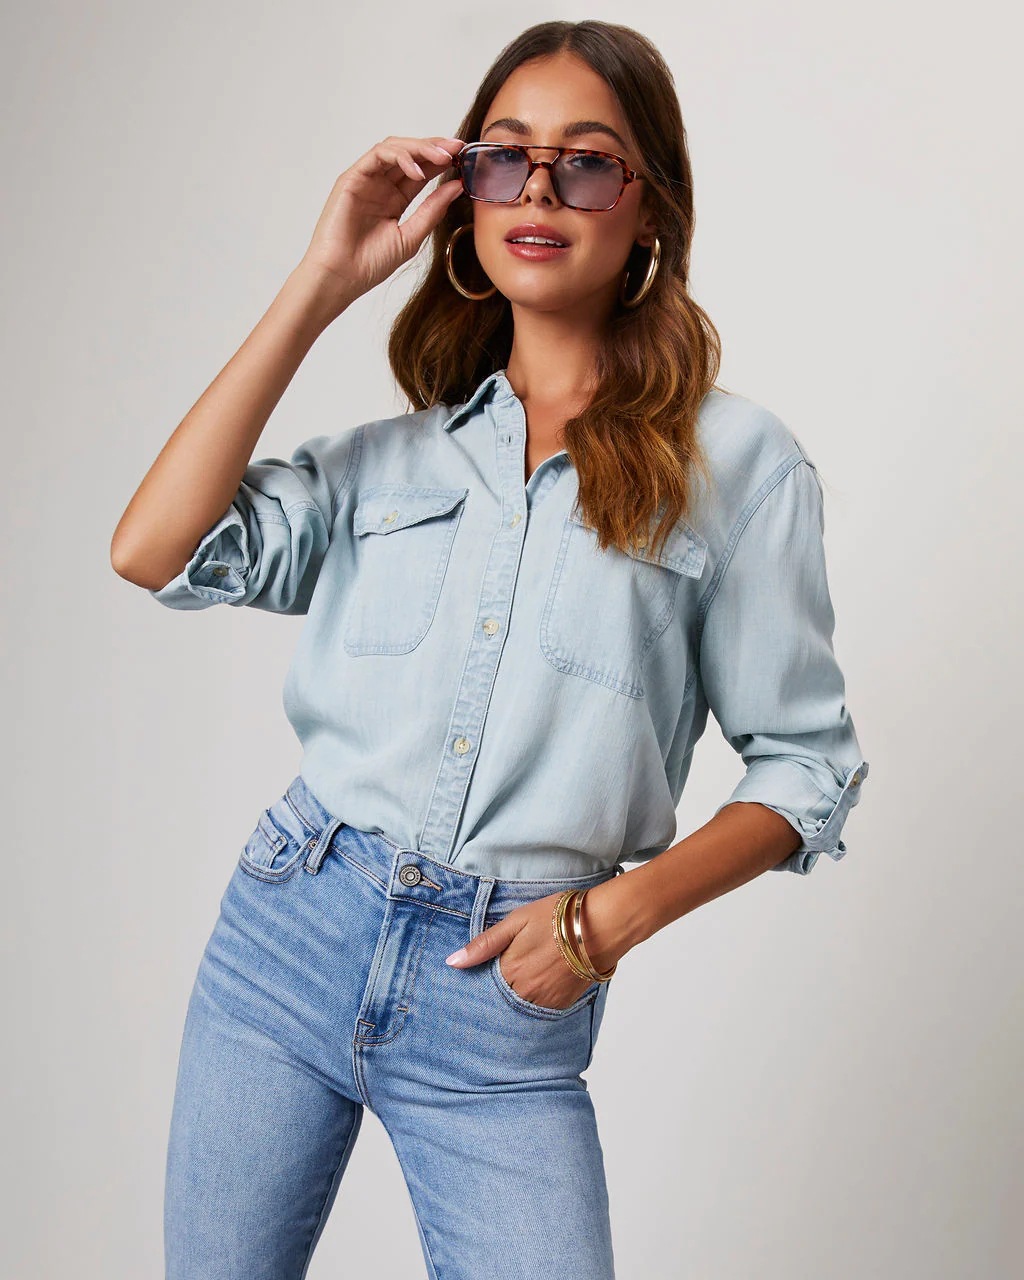 Denim Shirts For Women - Cute Jean Shirt Styles